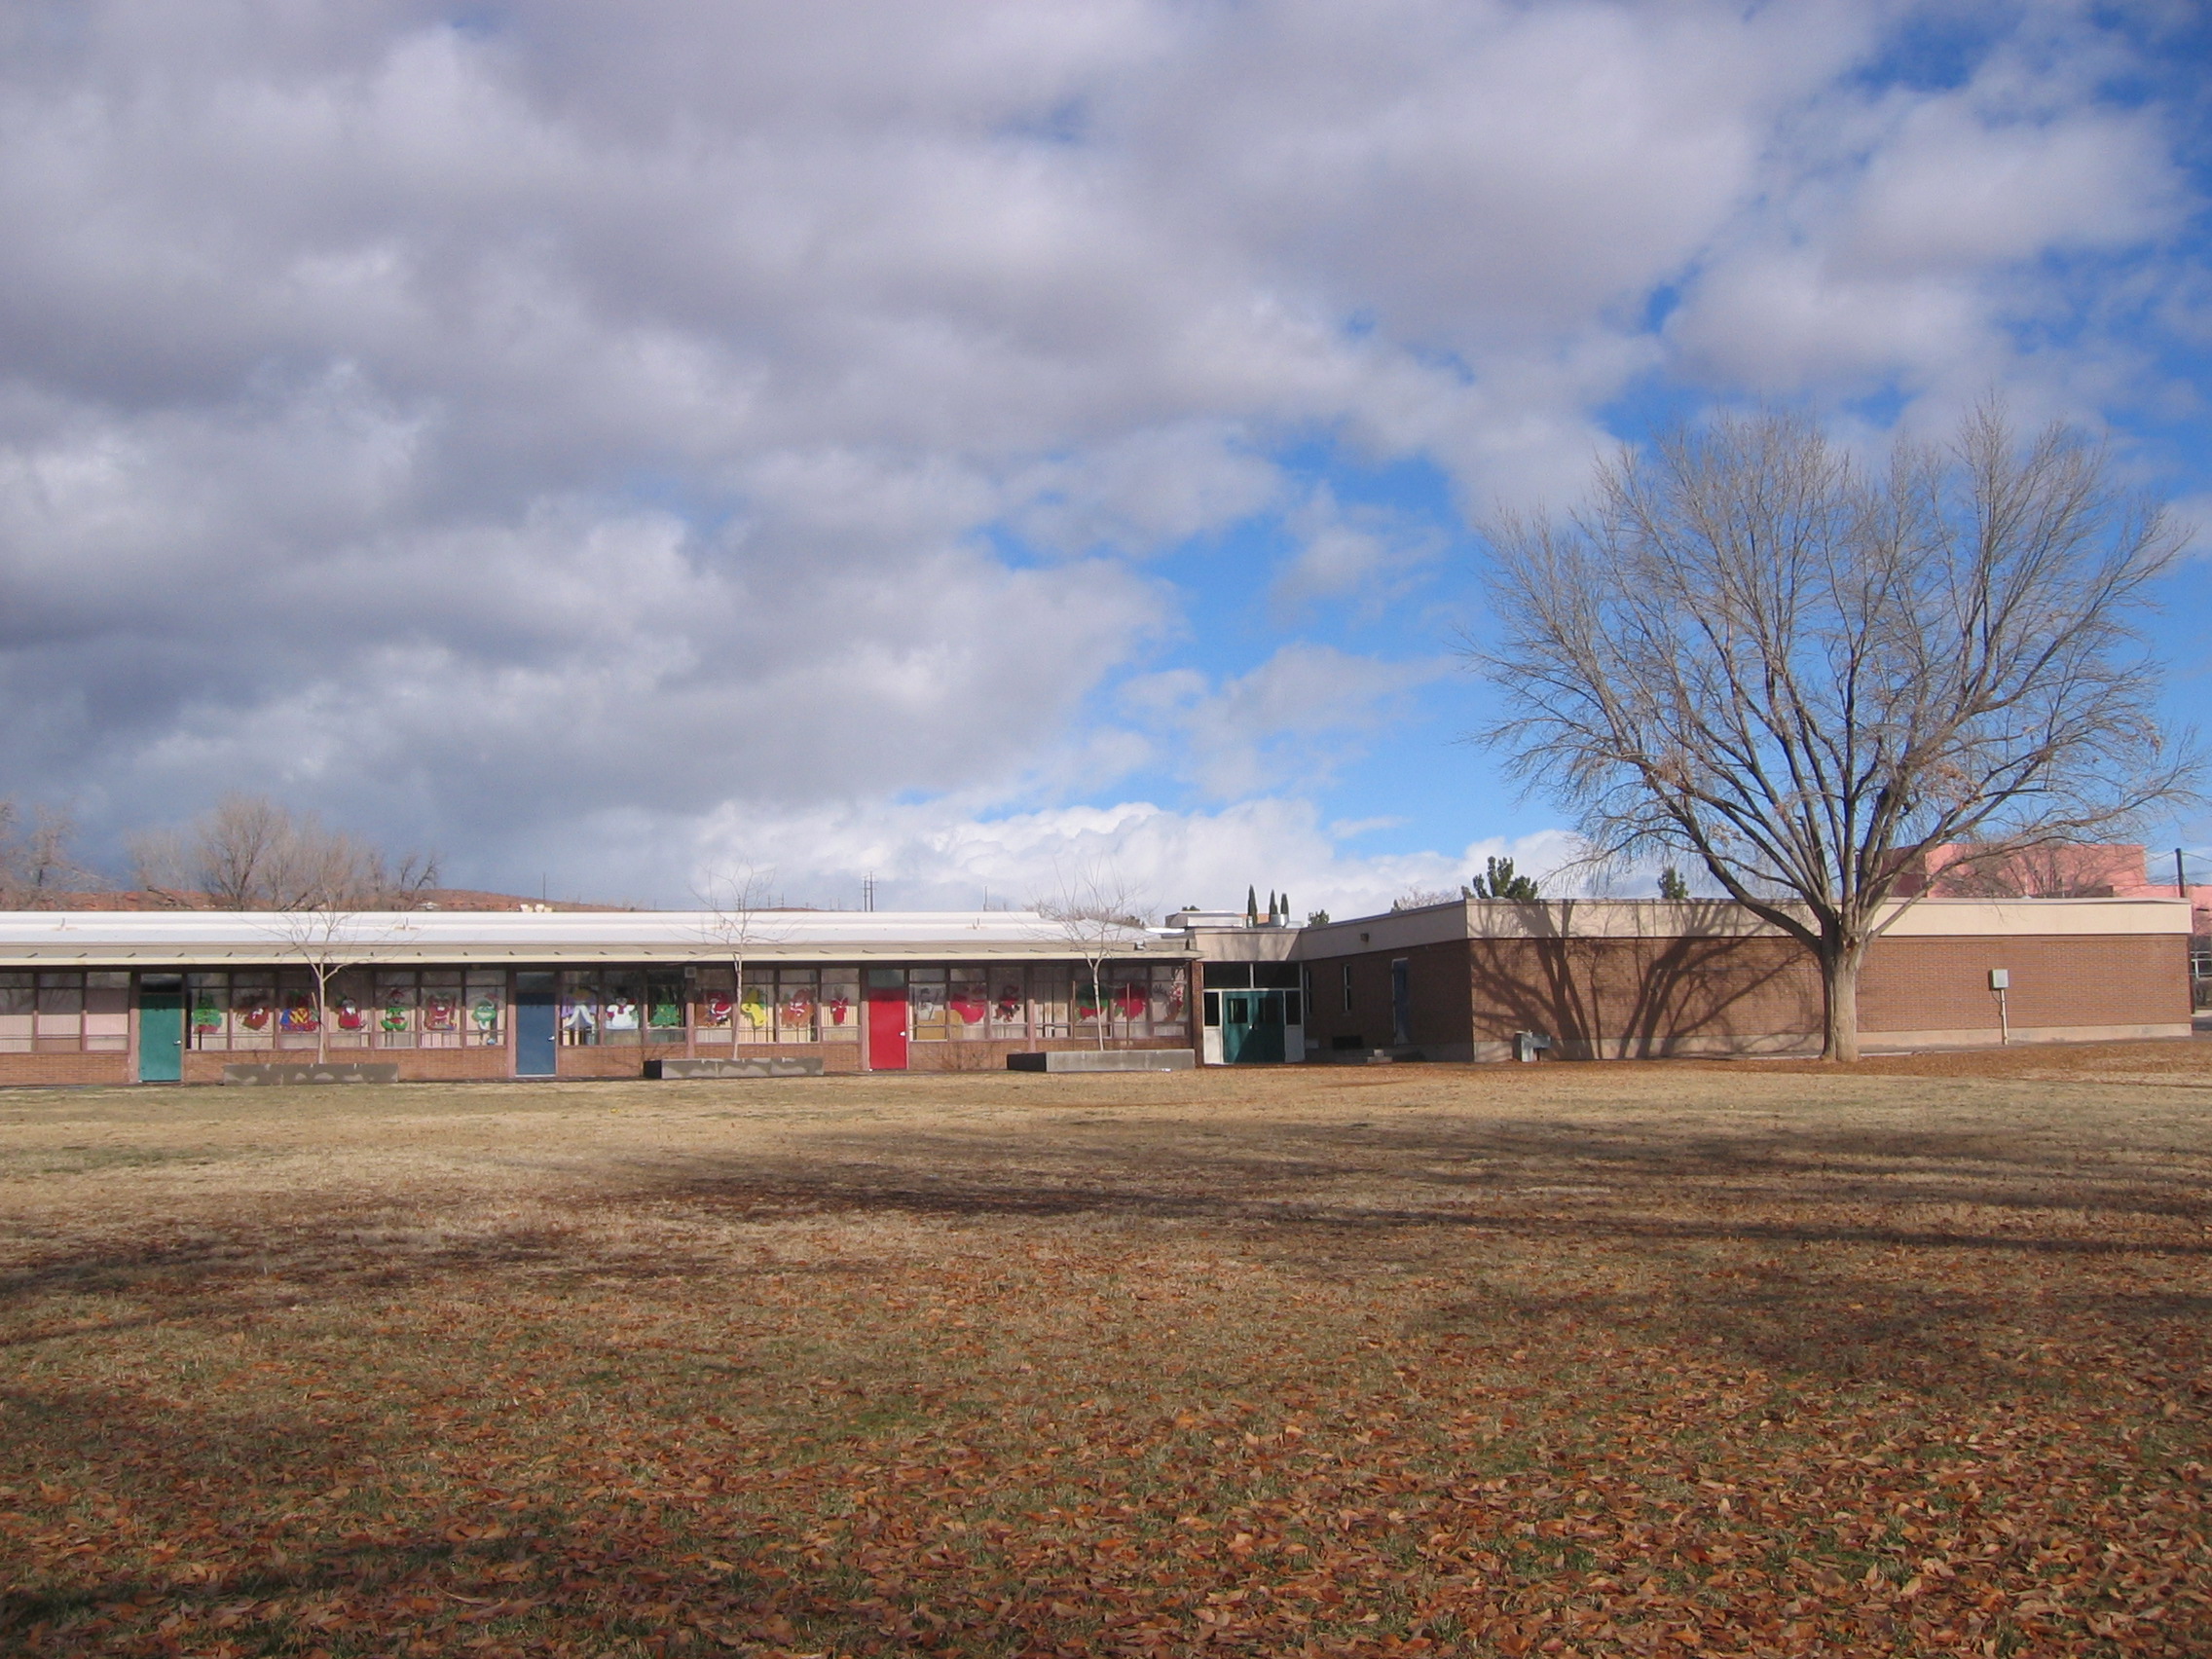 South side of East Elementary School